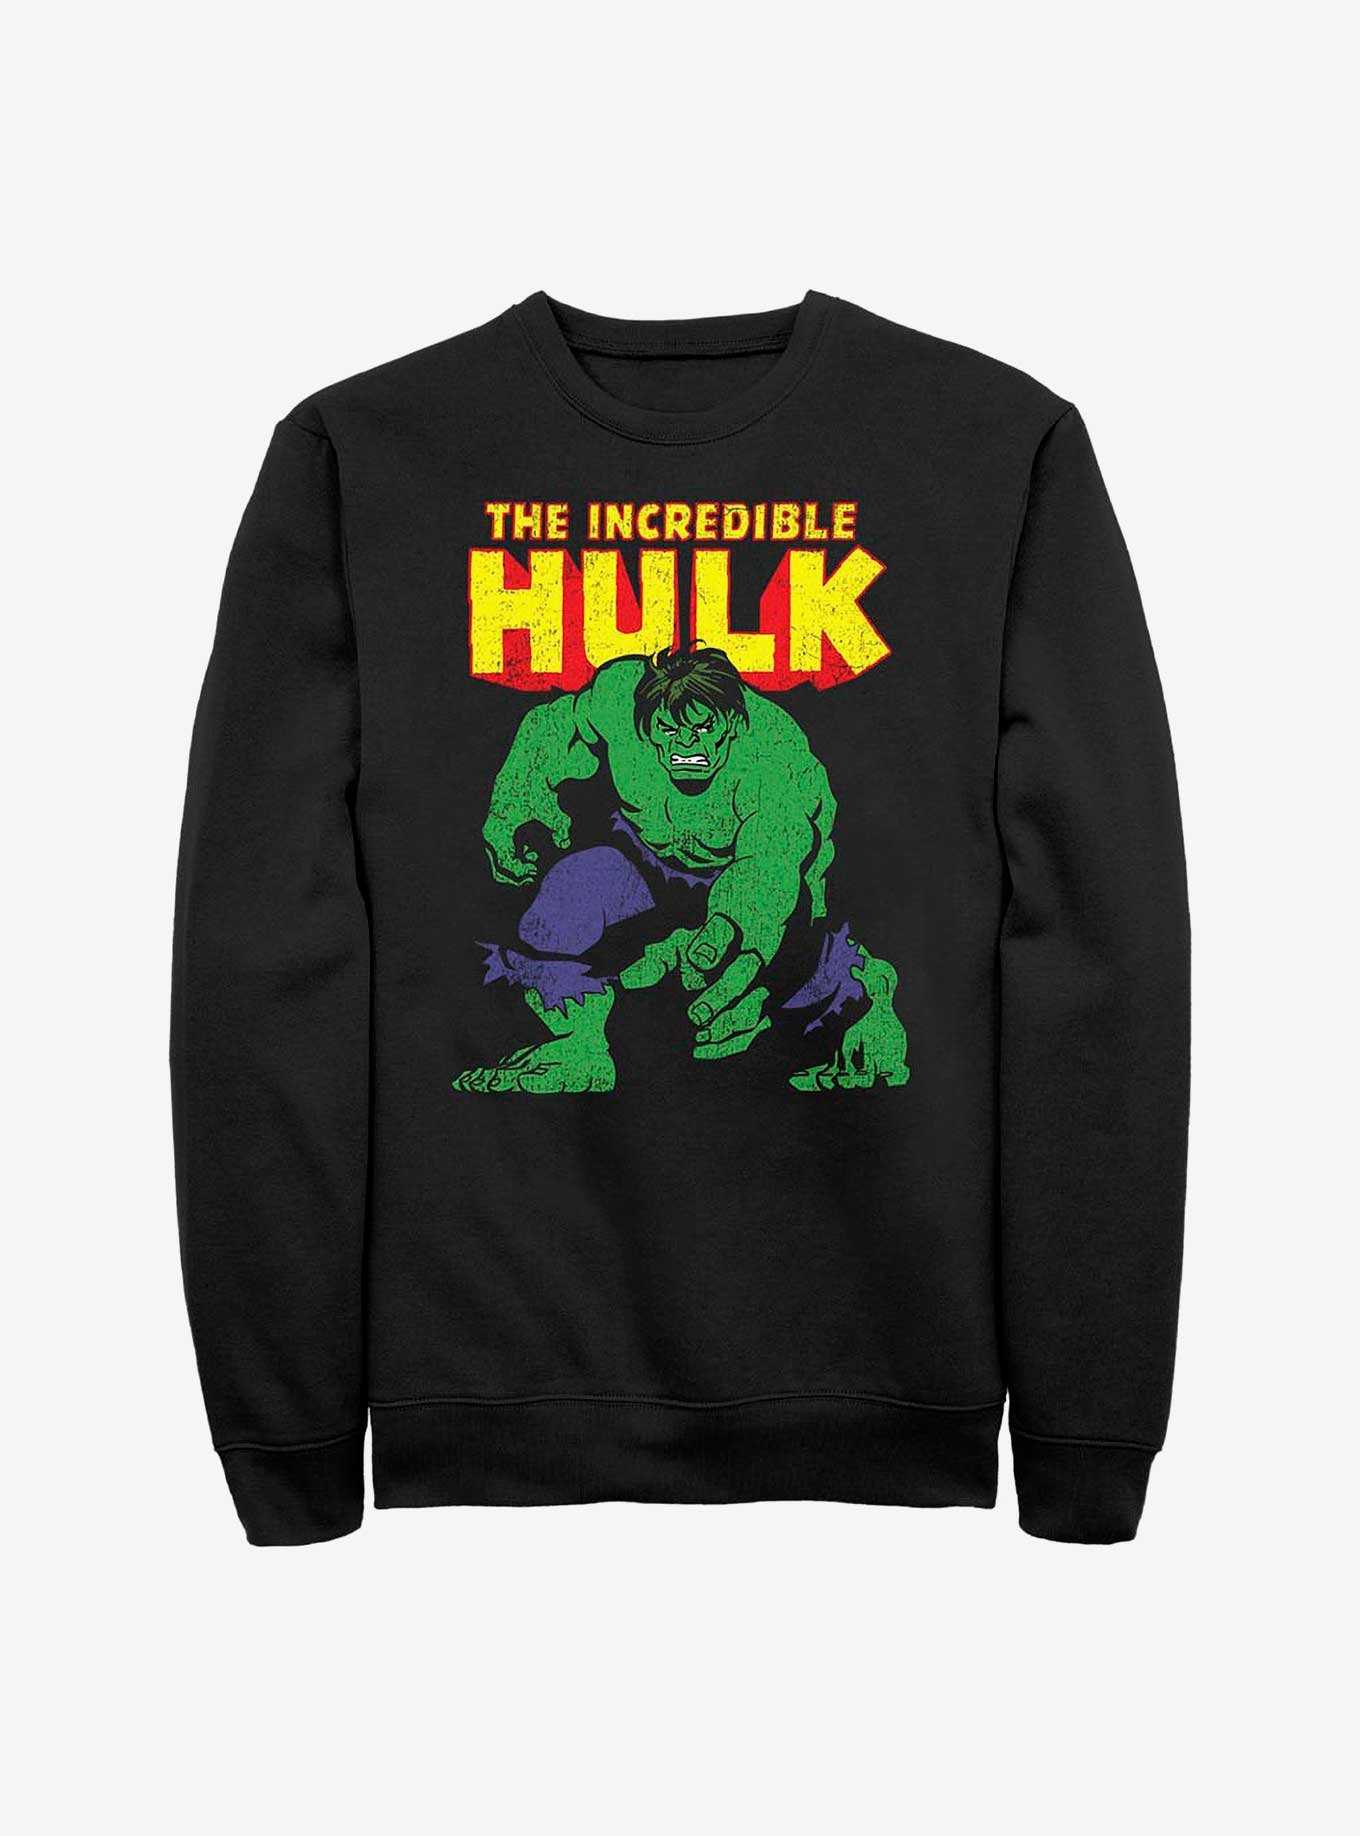 Marvel The Incredible Hulk Big Time Sweatshirt, , hi-res